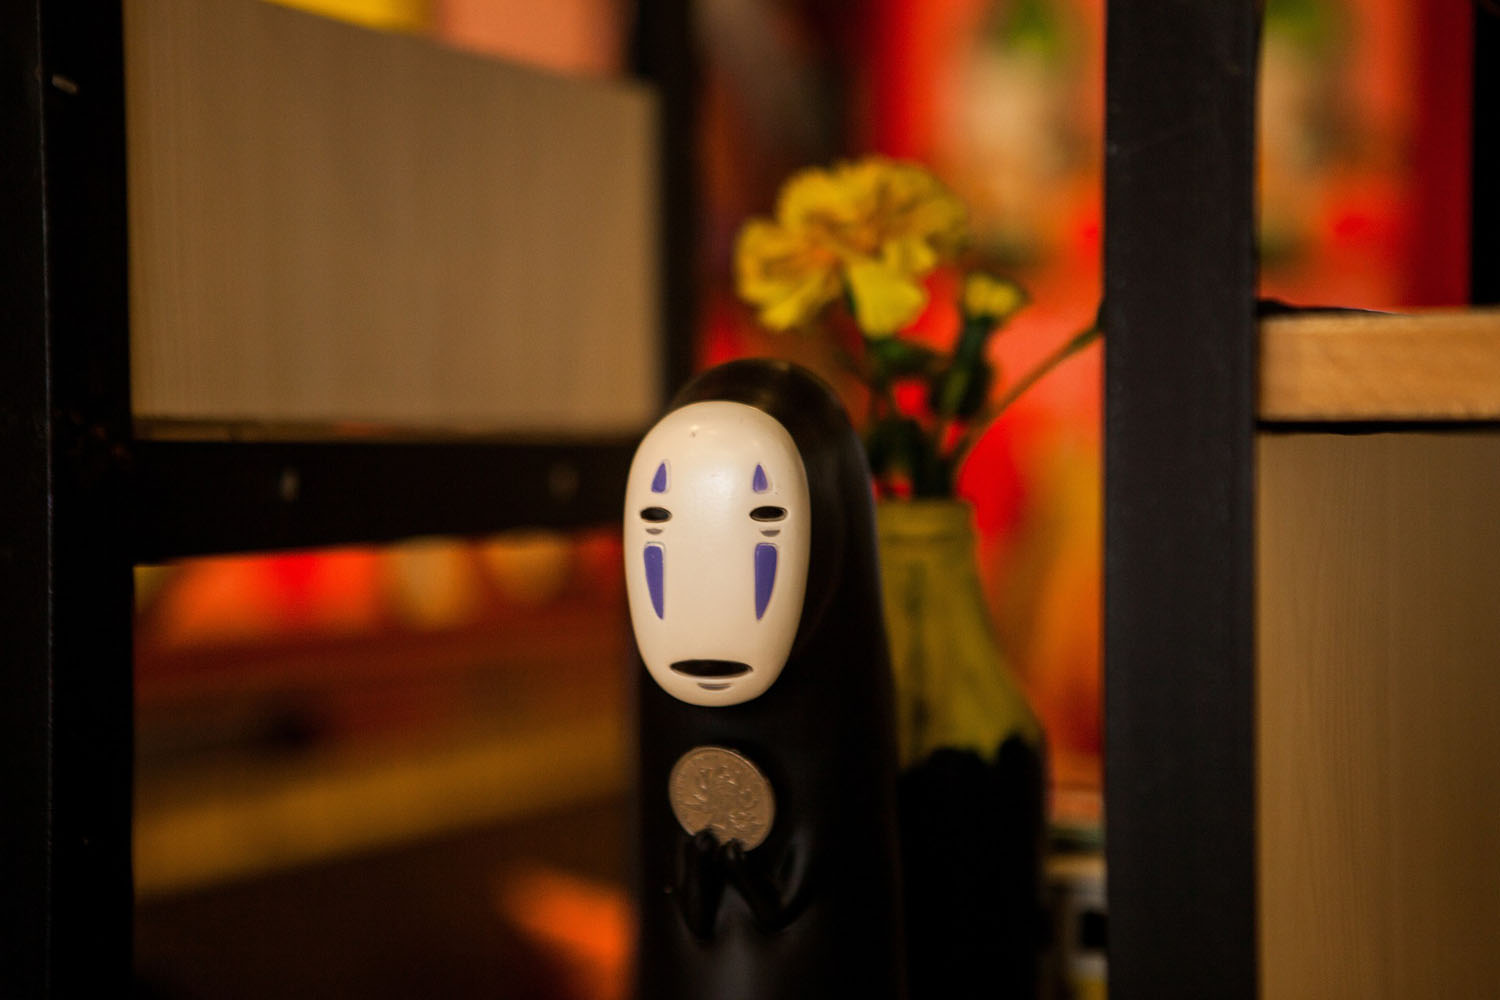 A Studio Ghibli Spirited Away No-Face ornament